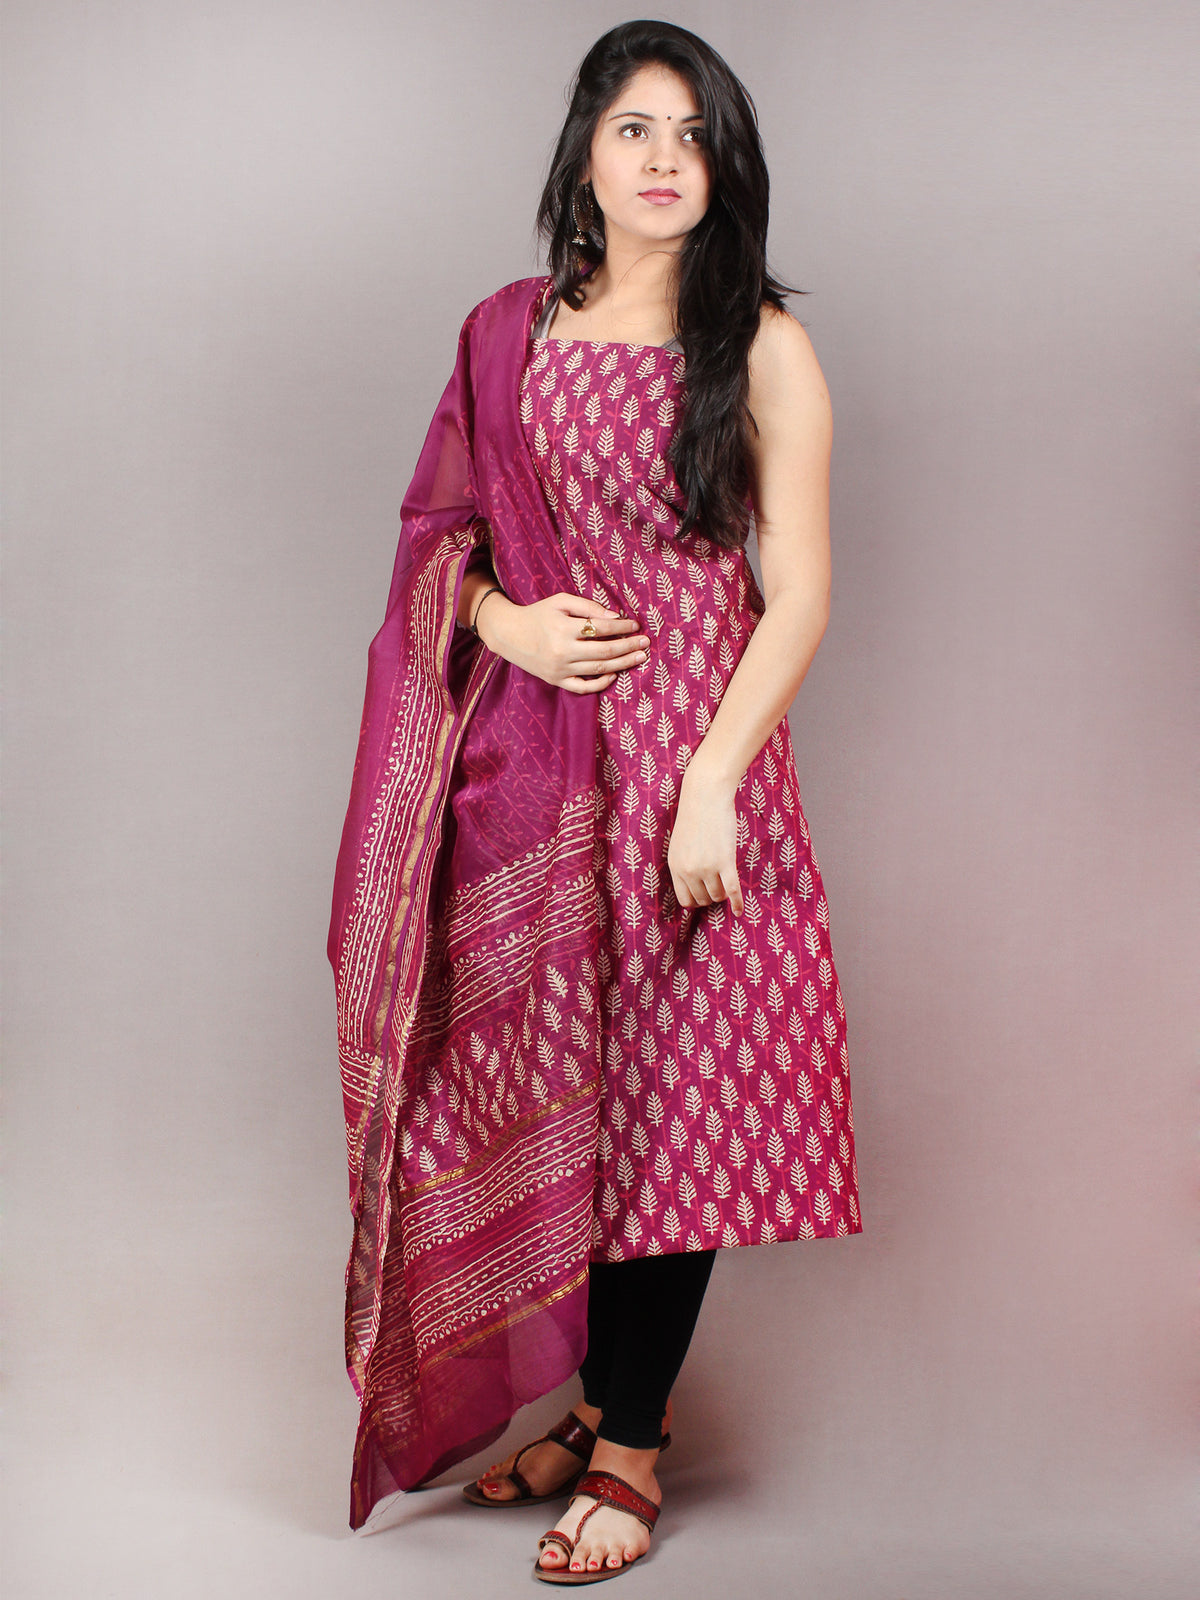 Fandango Pink Beige Hand Block Printed Chanderi Kurta-Salwar Fabric With Chanderi Dupatta - S1628089